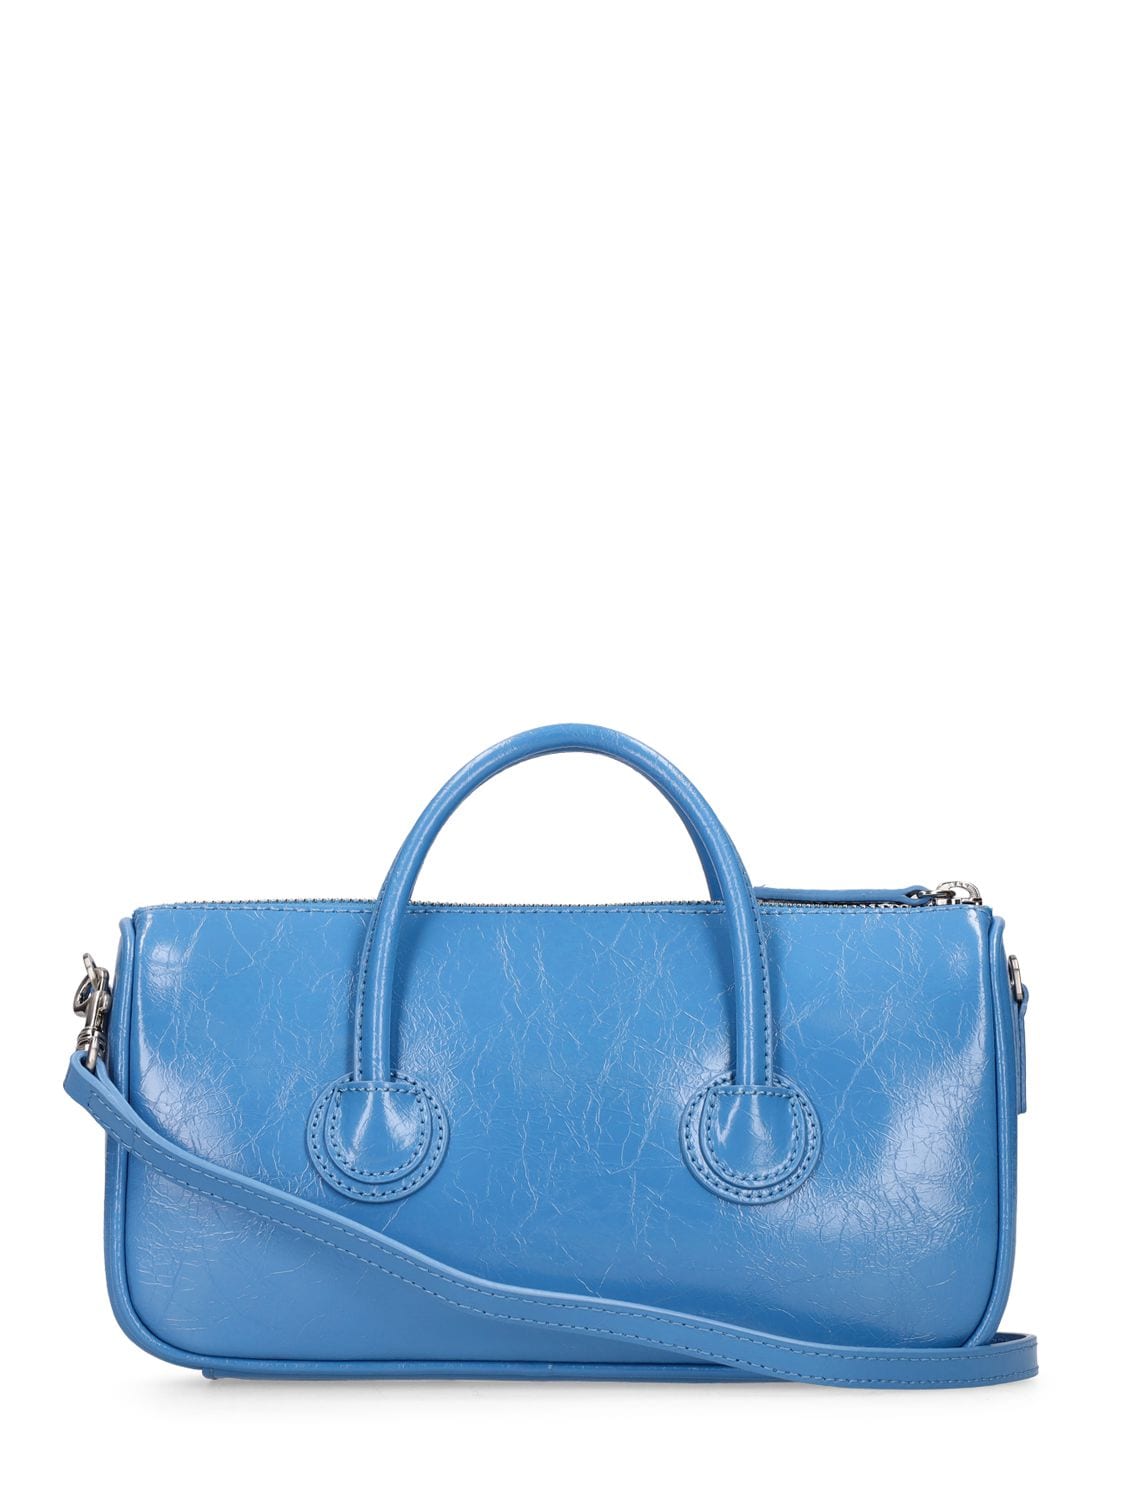 Marge Sherwood Piping Mini Bag in Blue